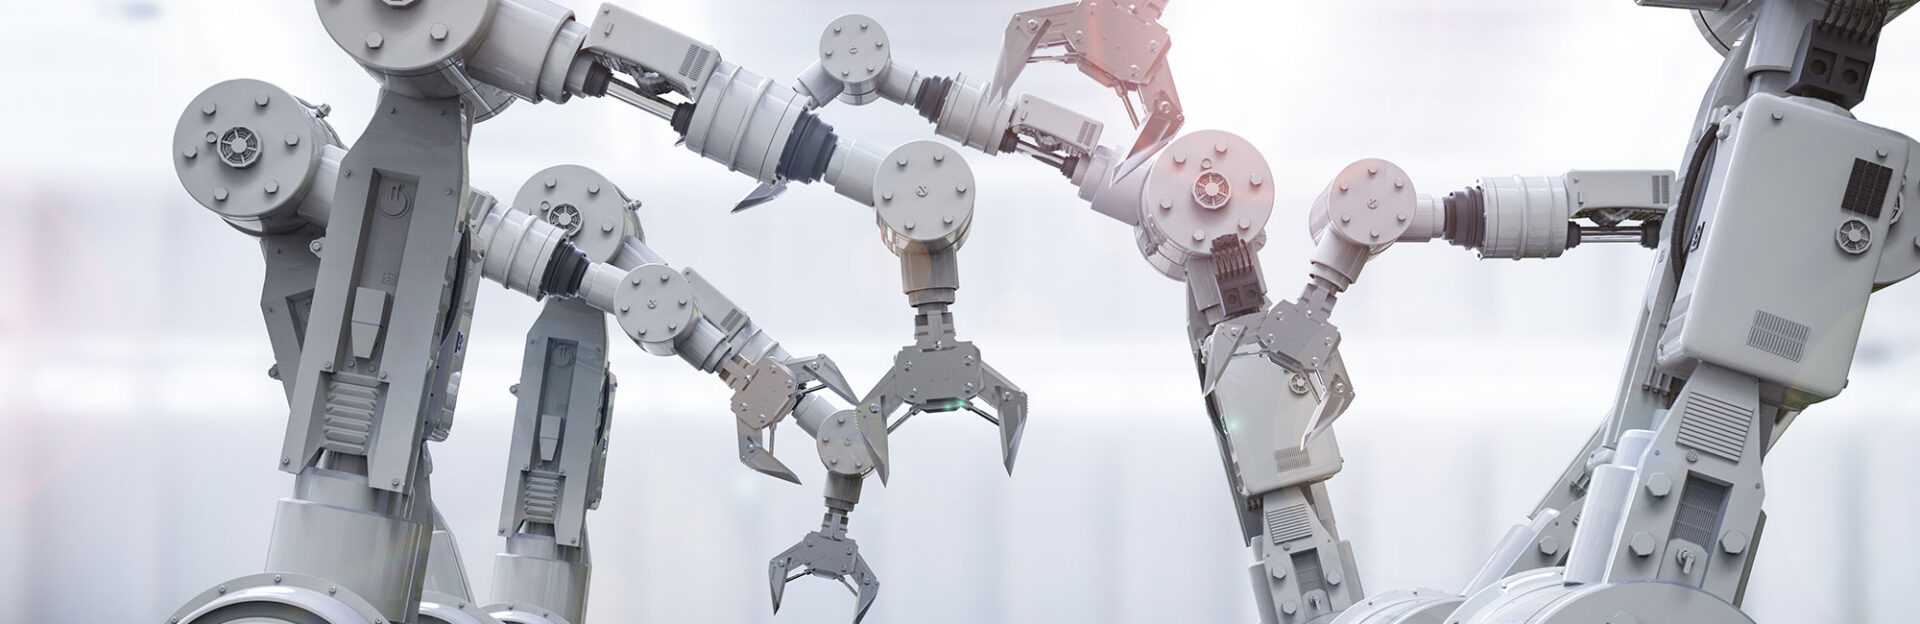 Robots And Similar Equipment Market